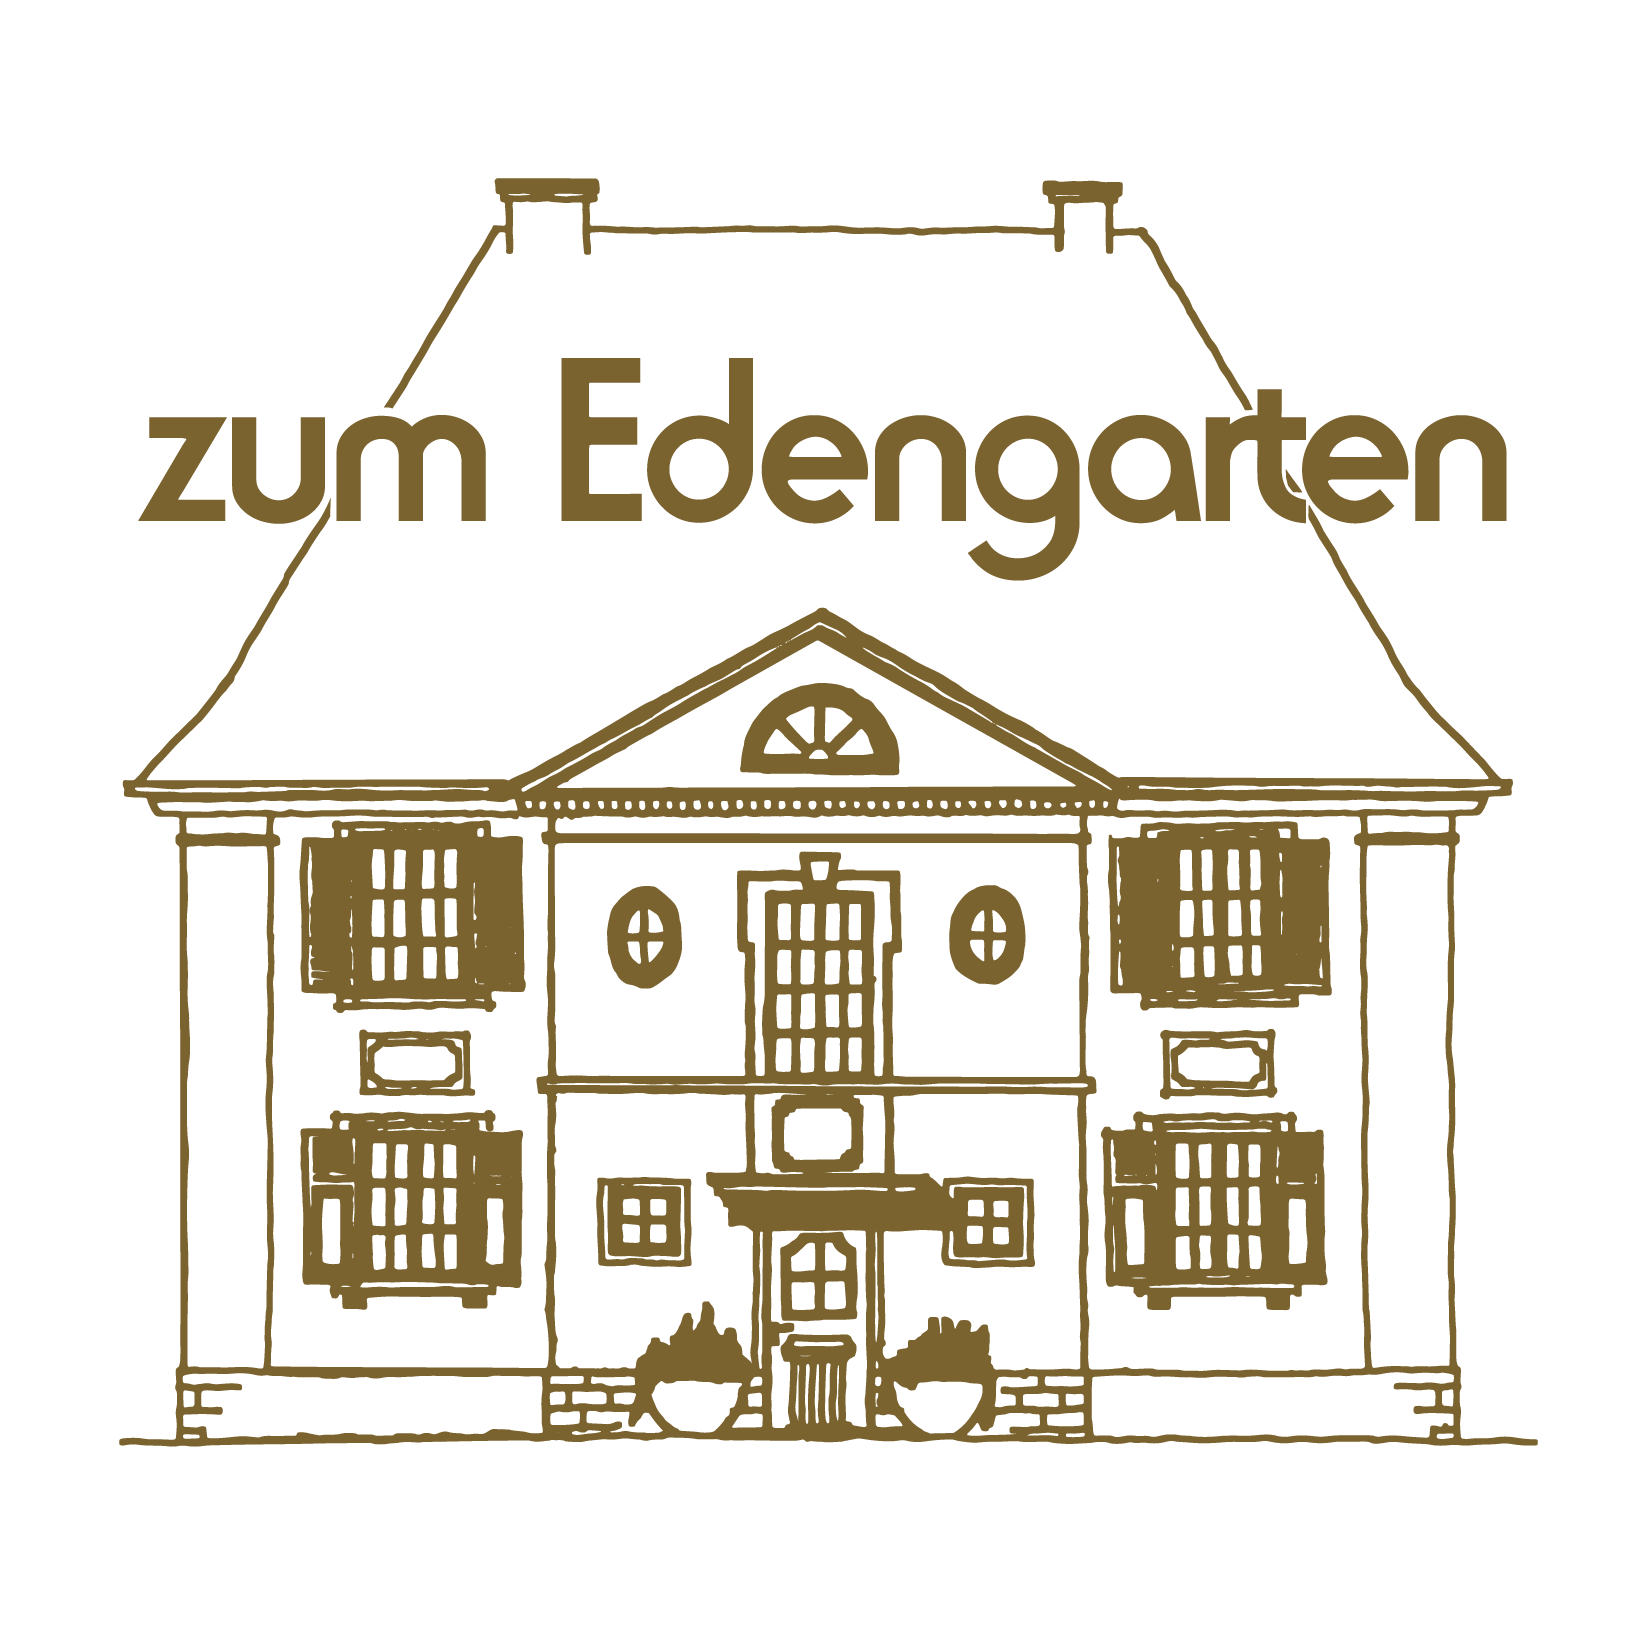 Zum Edengarten - Anita Mend